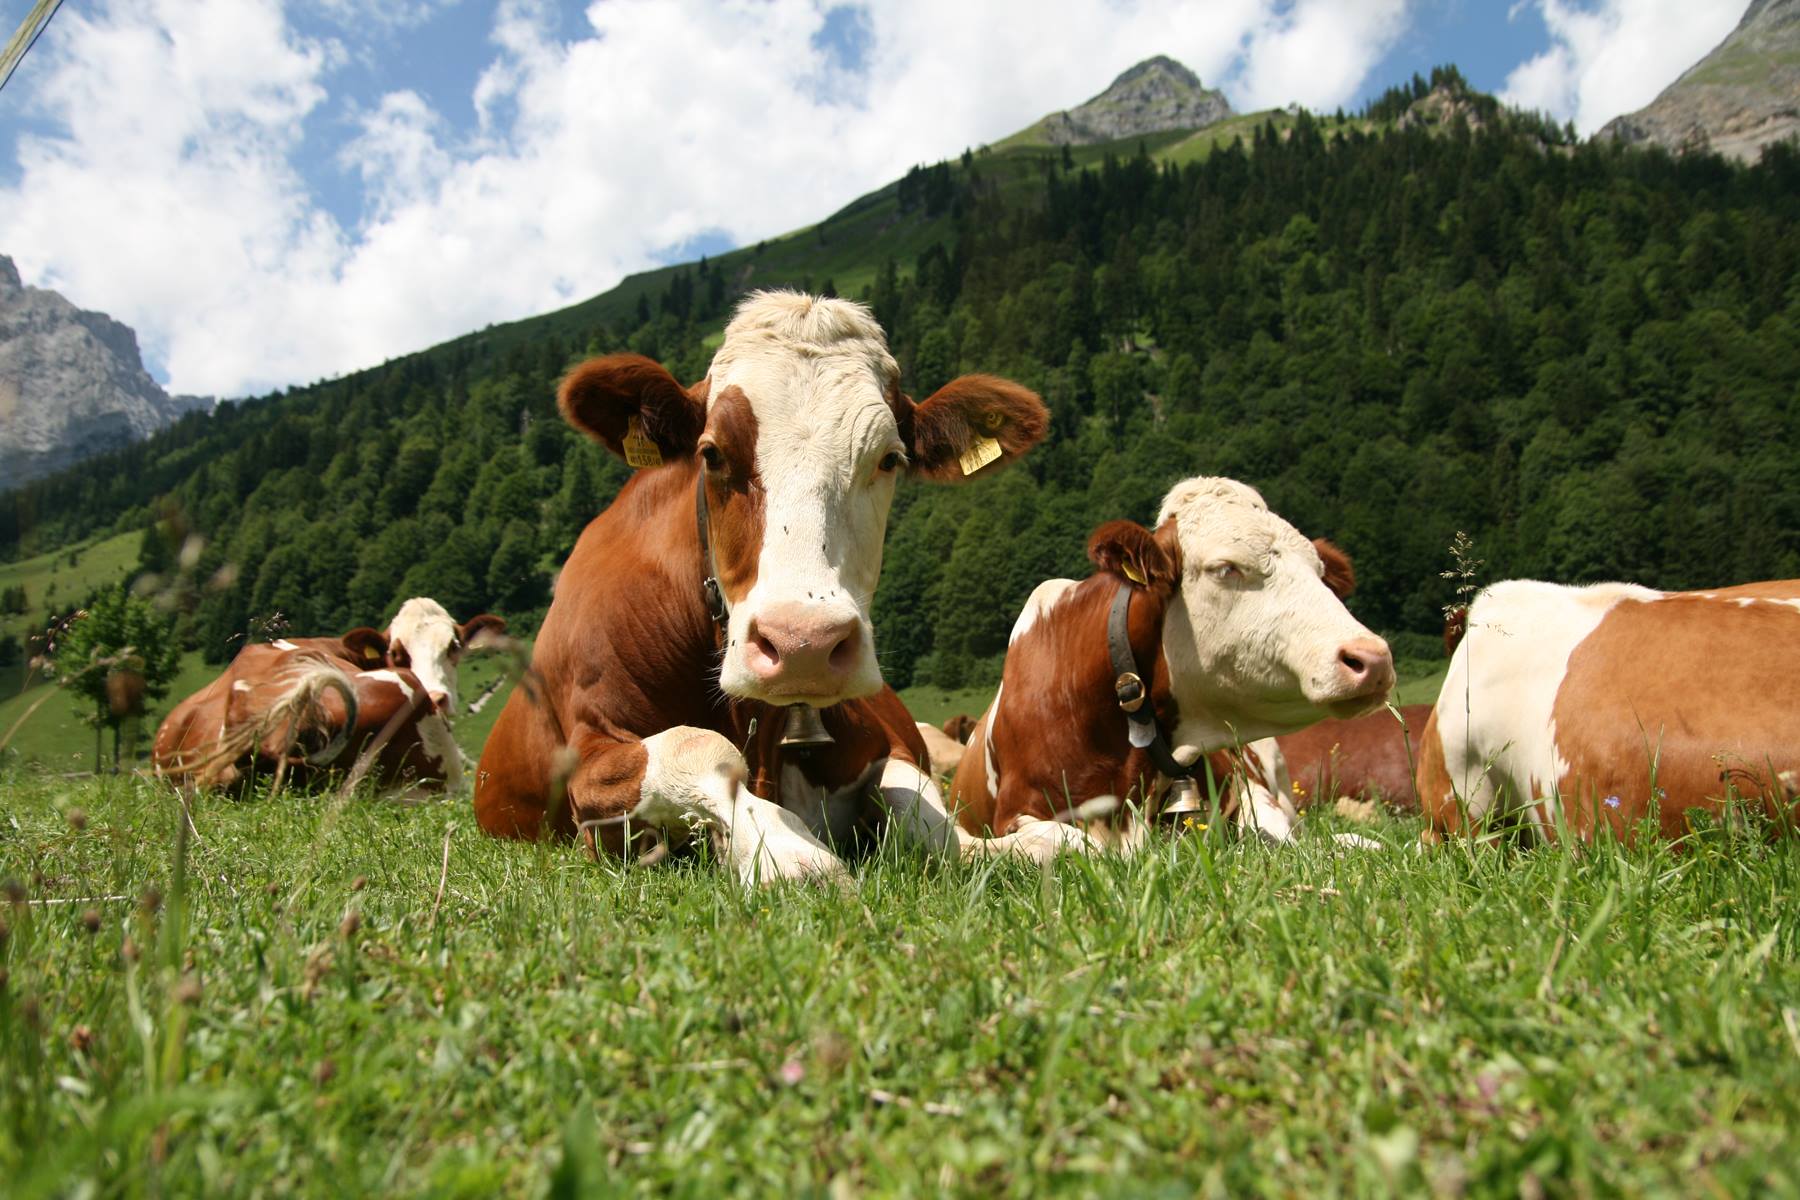 21st century brings more awareness of farm animal welfare - Certified Humane